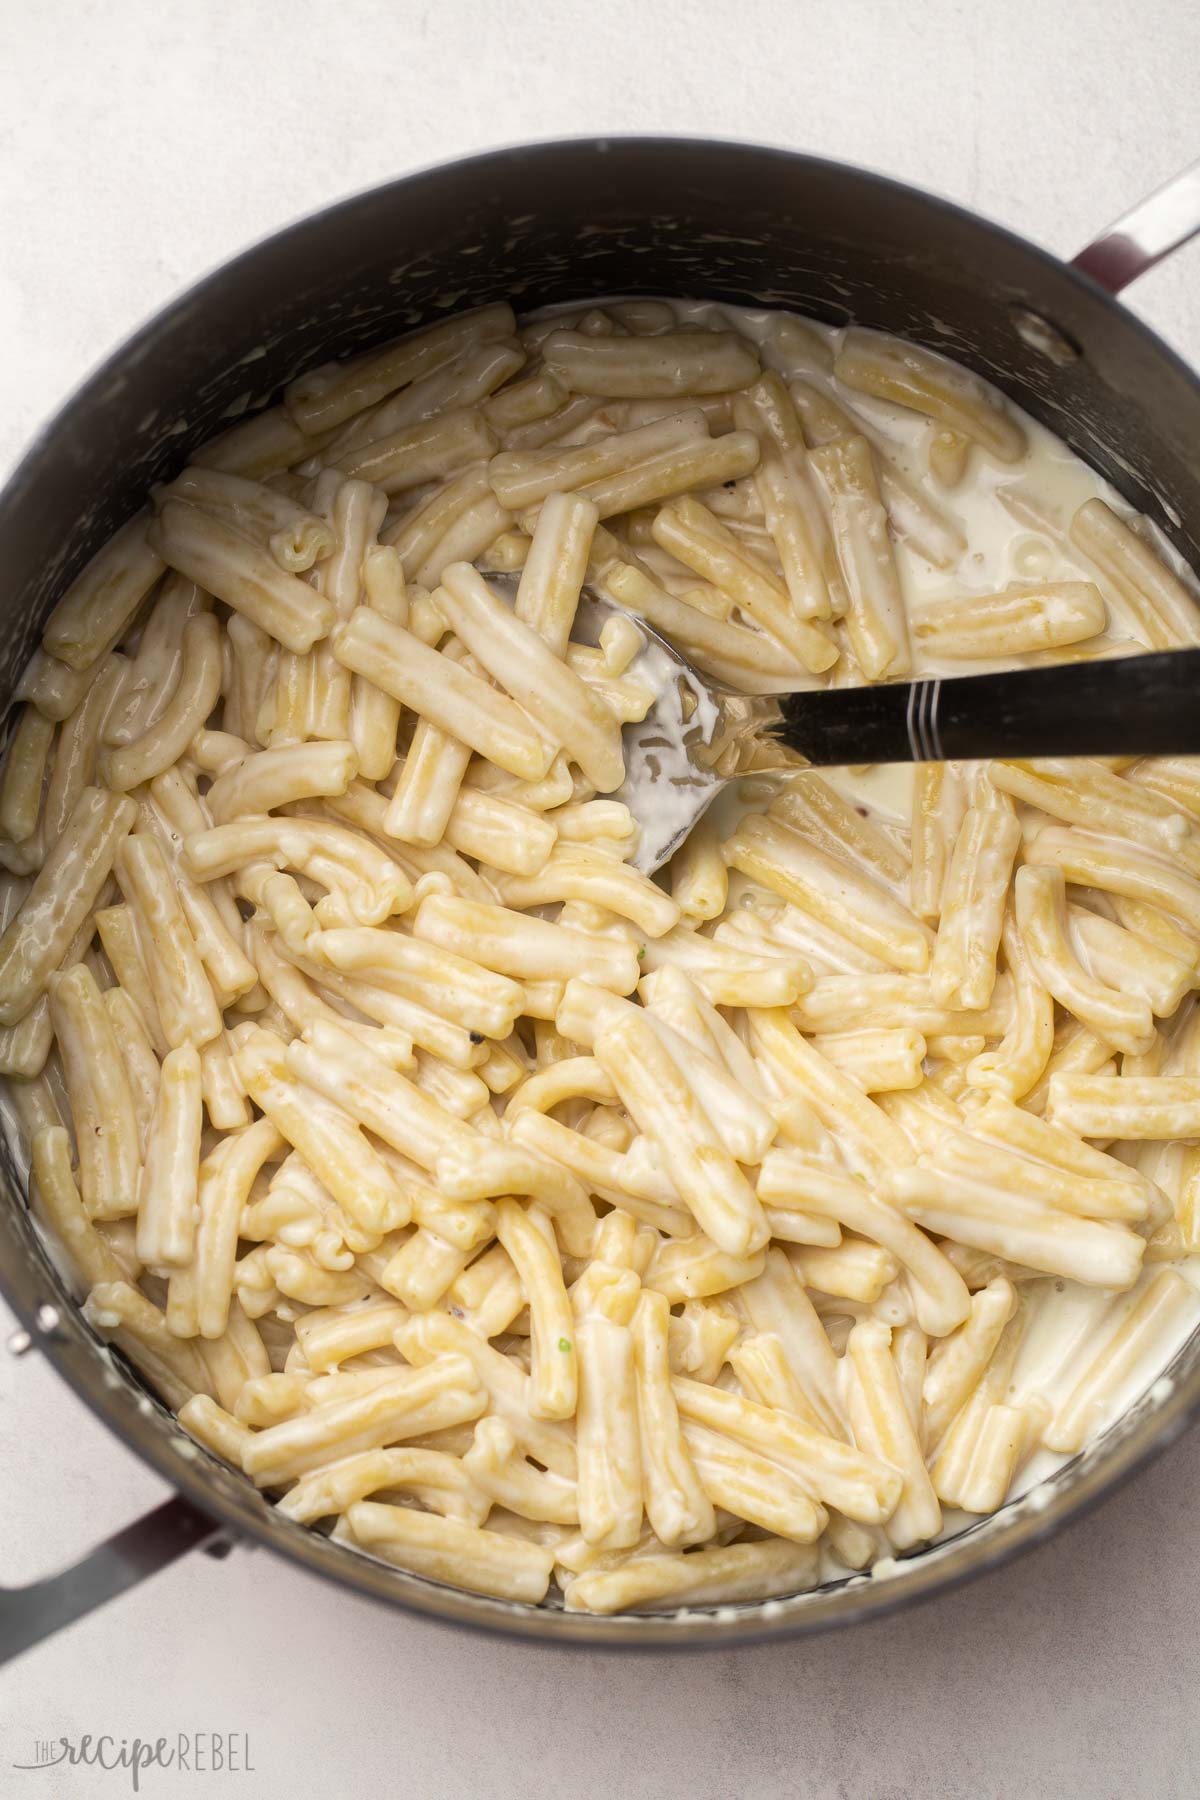 full pot of prepared pasta with steel scoop.